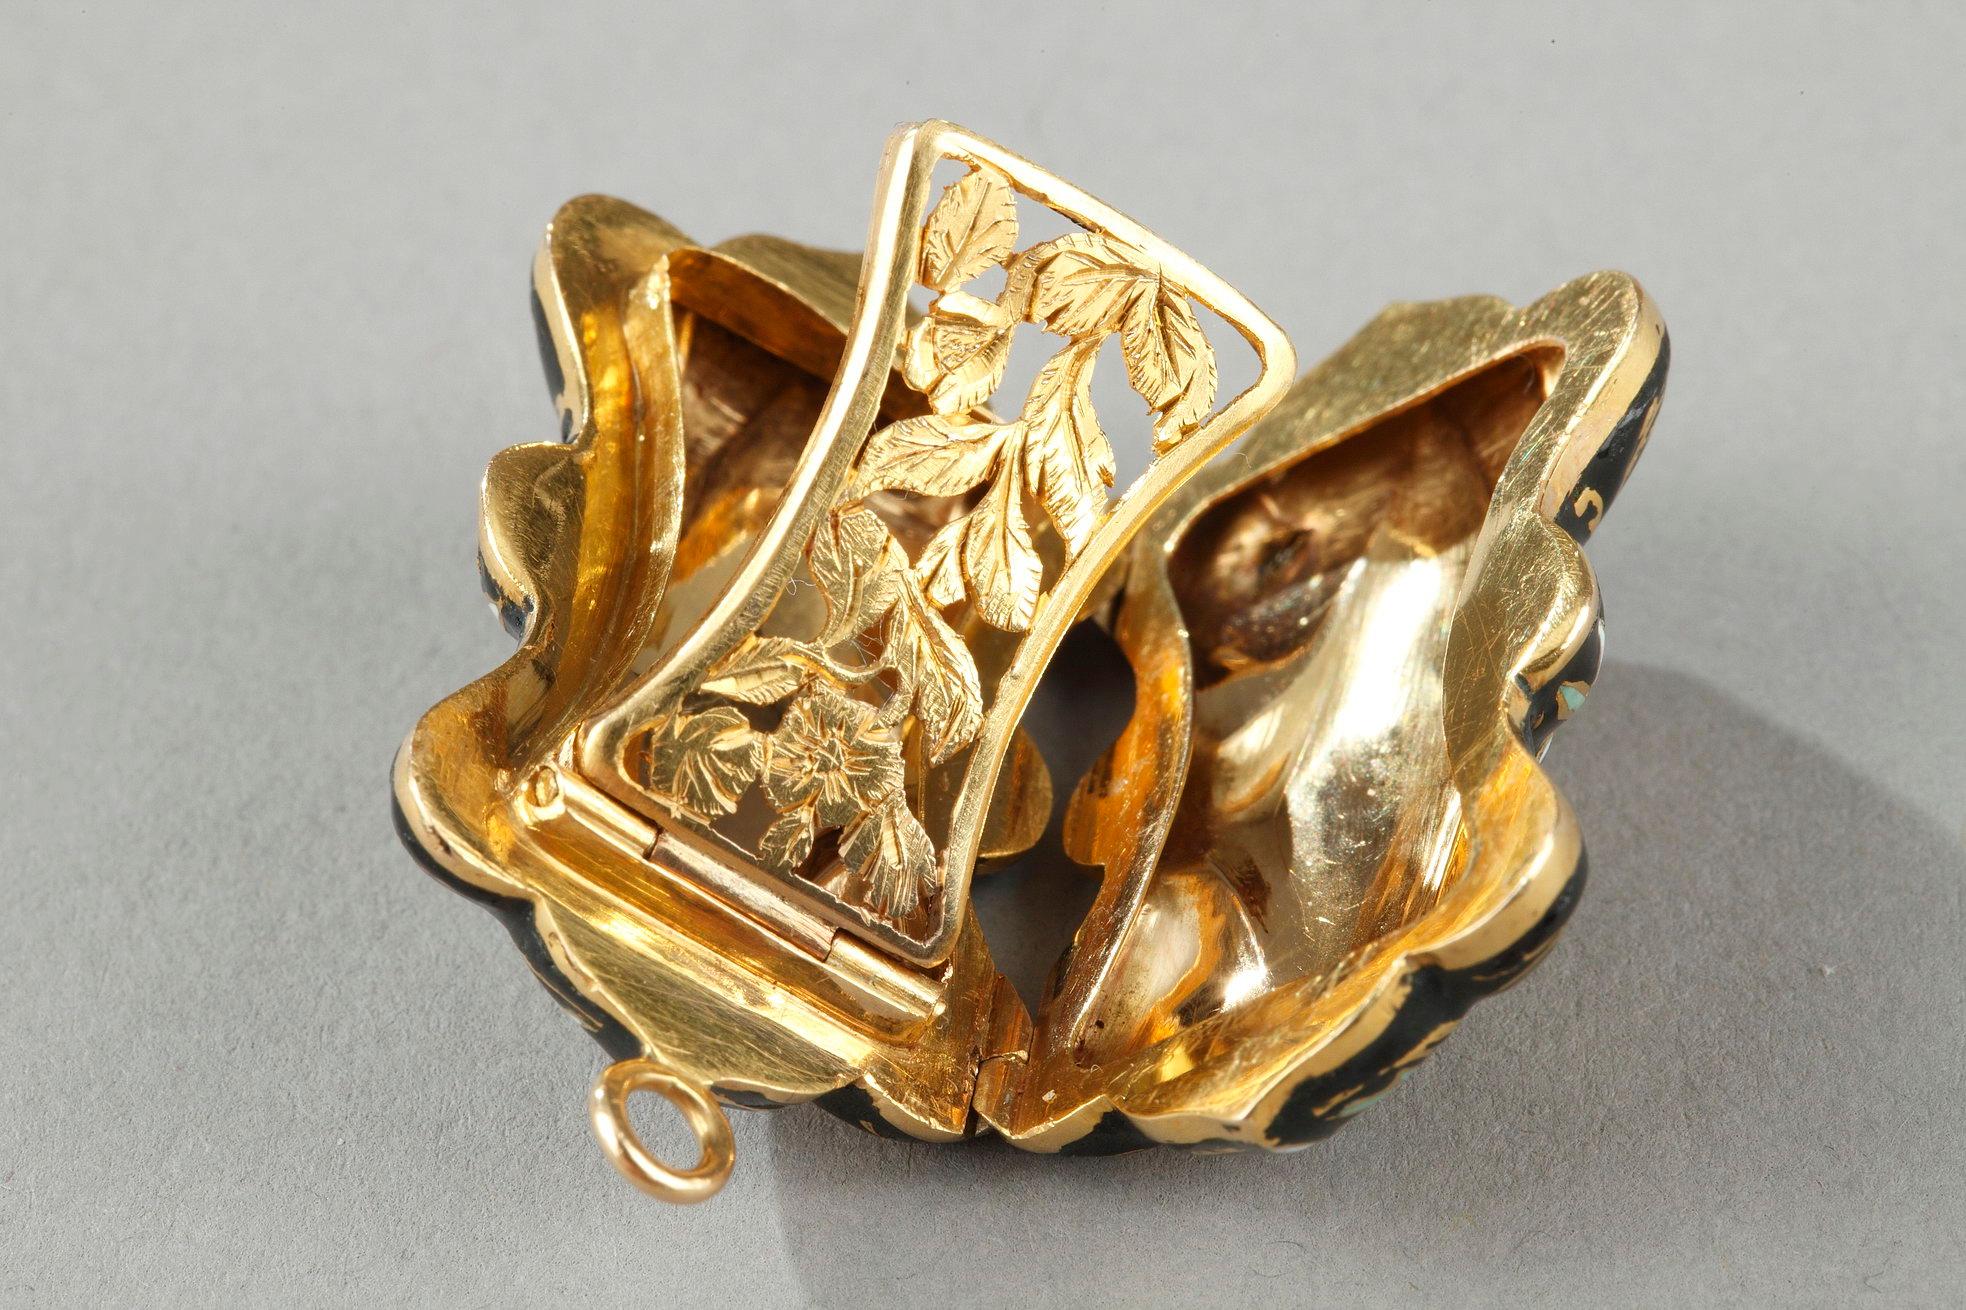 Gold and Enamel Vinaigrette, Mid-19th Century Work For Sale 3